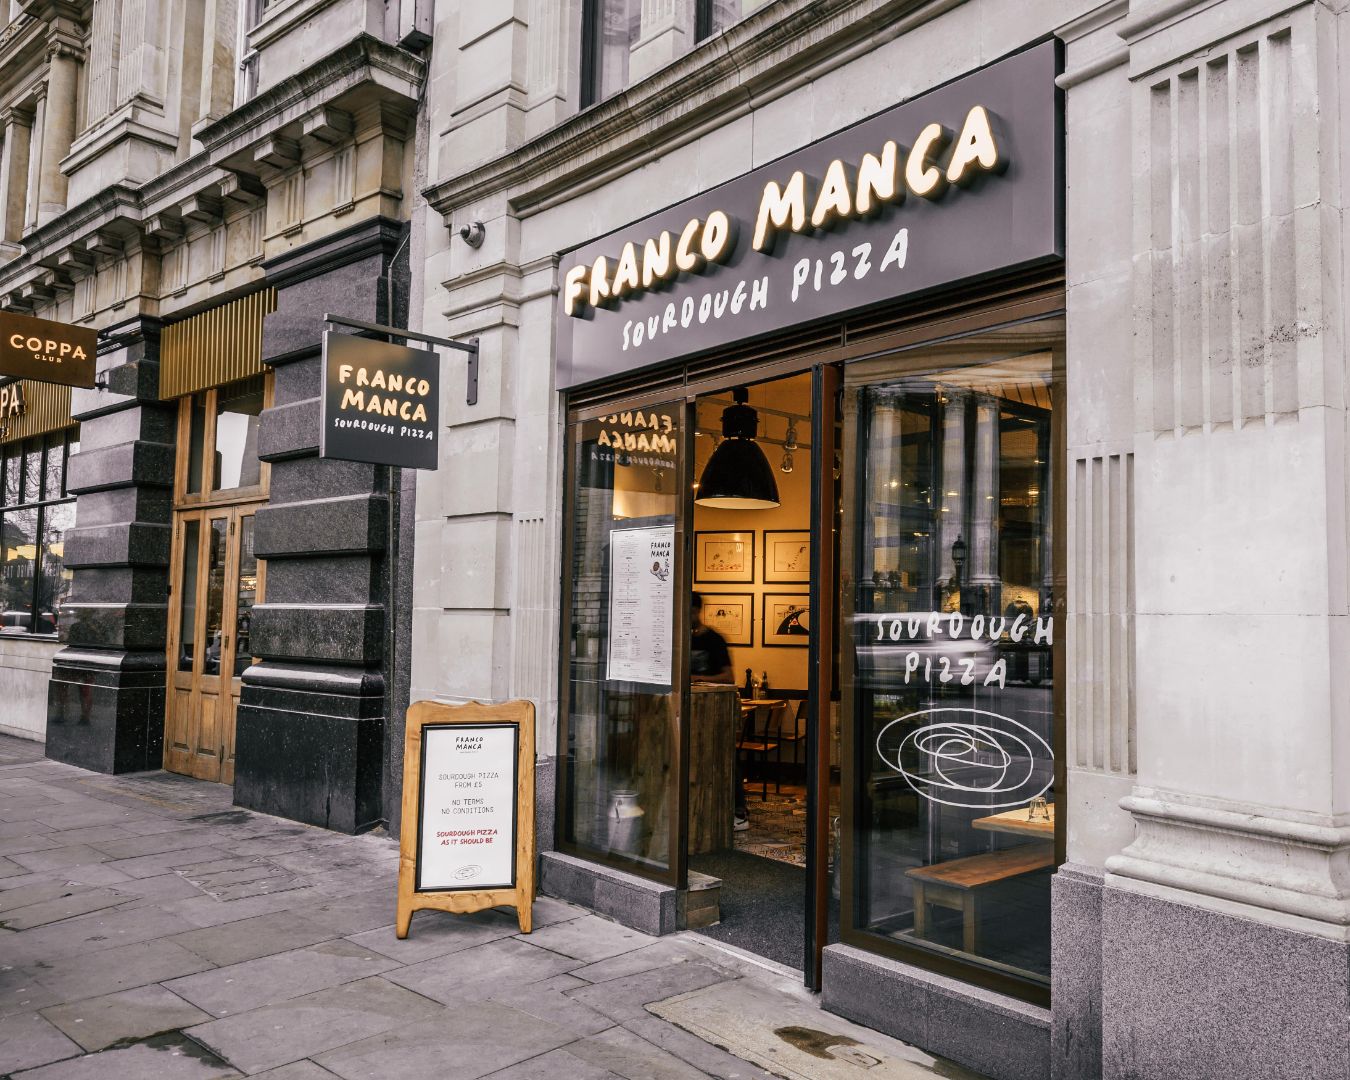 Franco Manca pizzeria in London